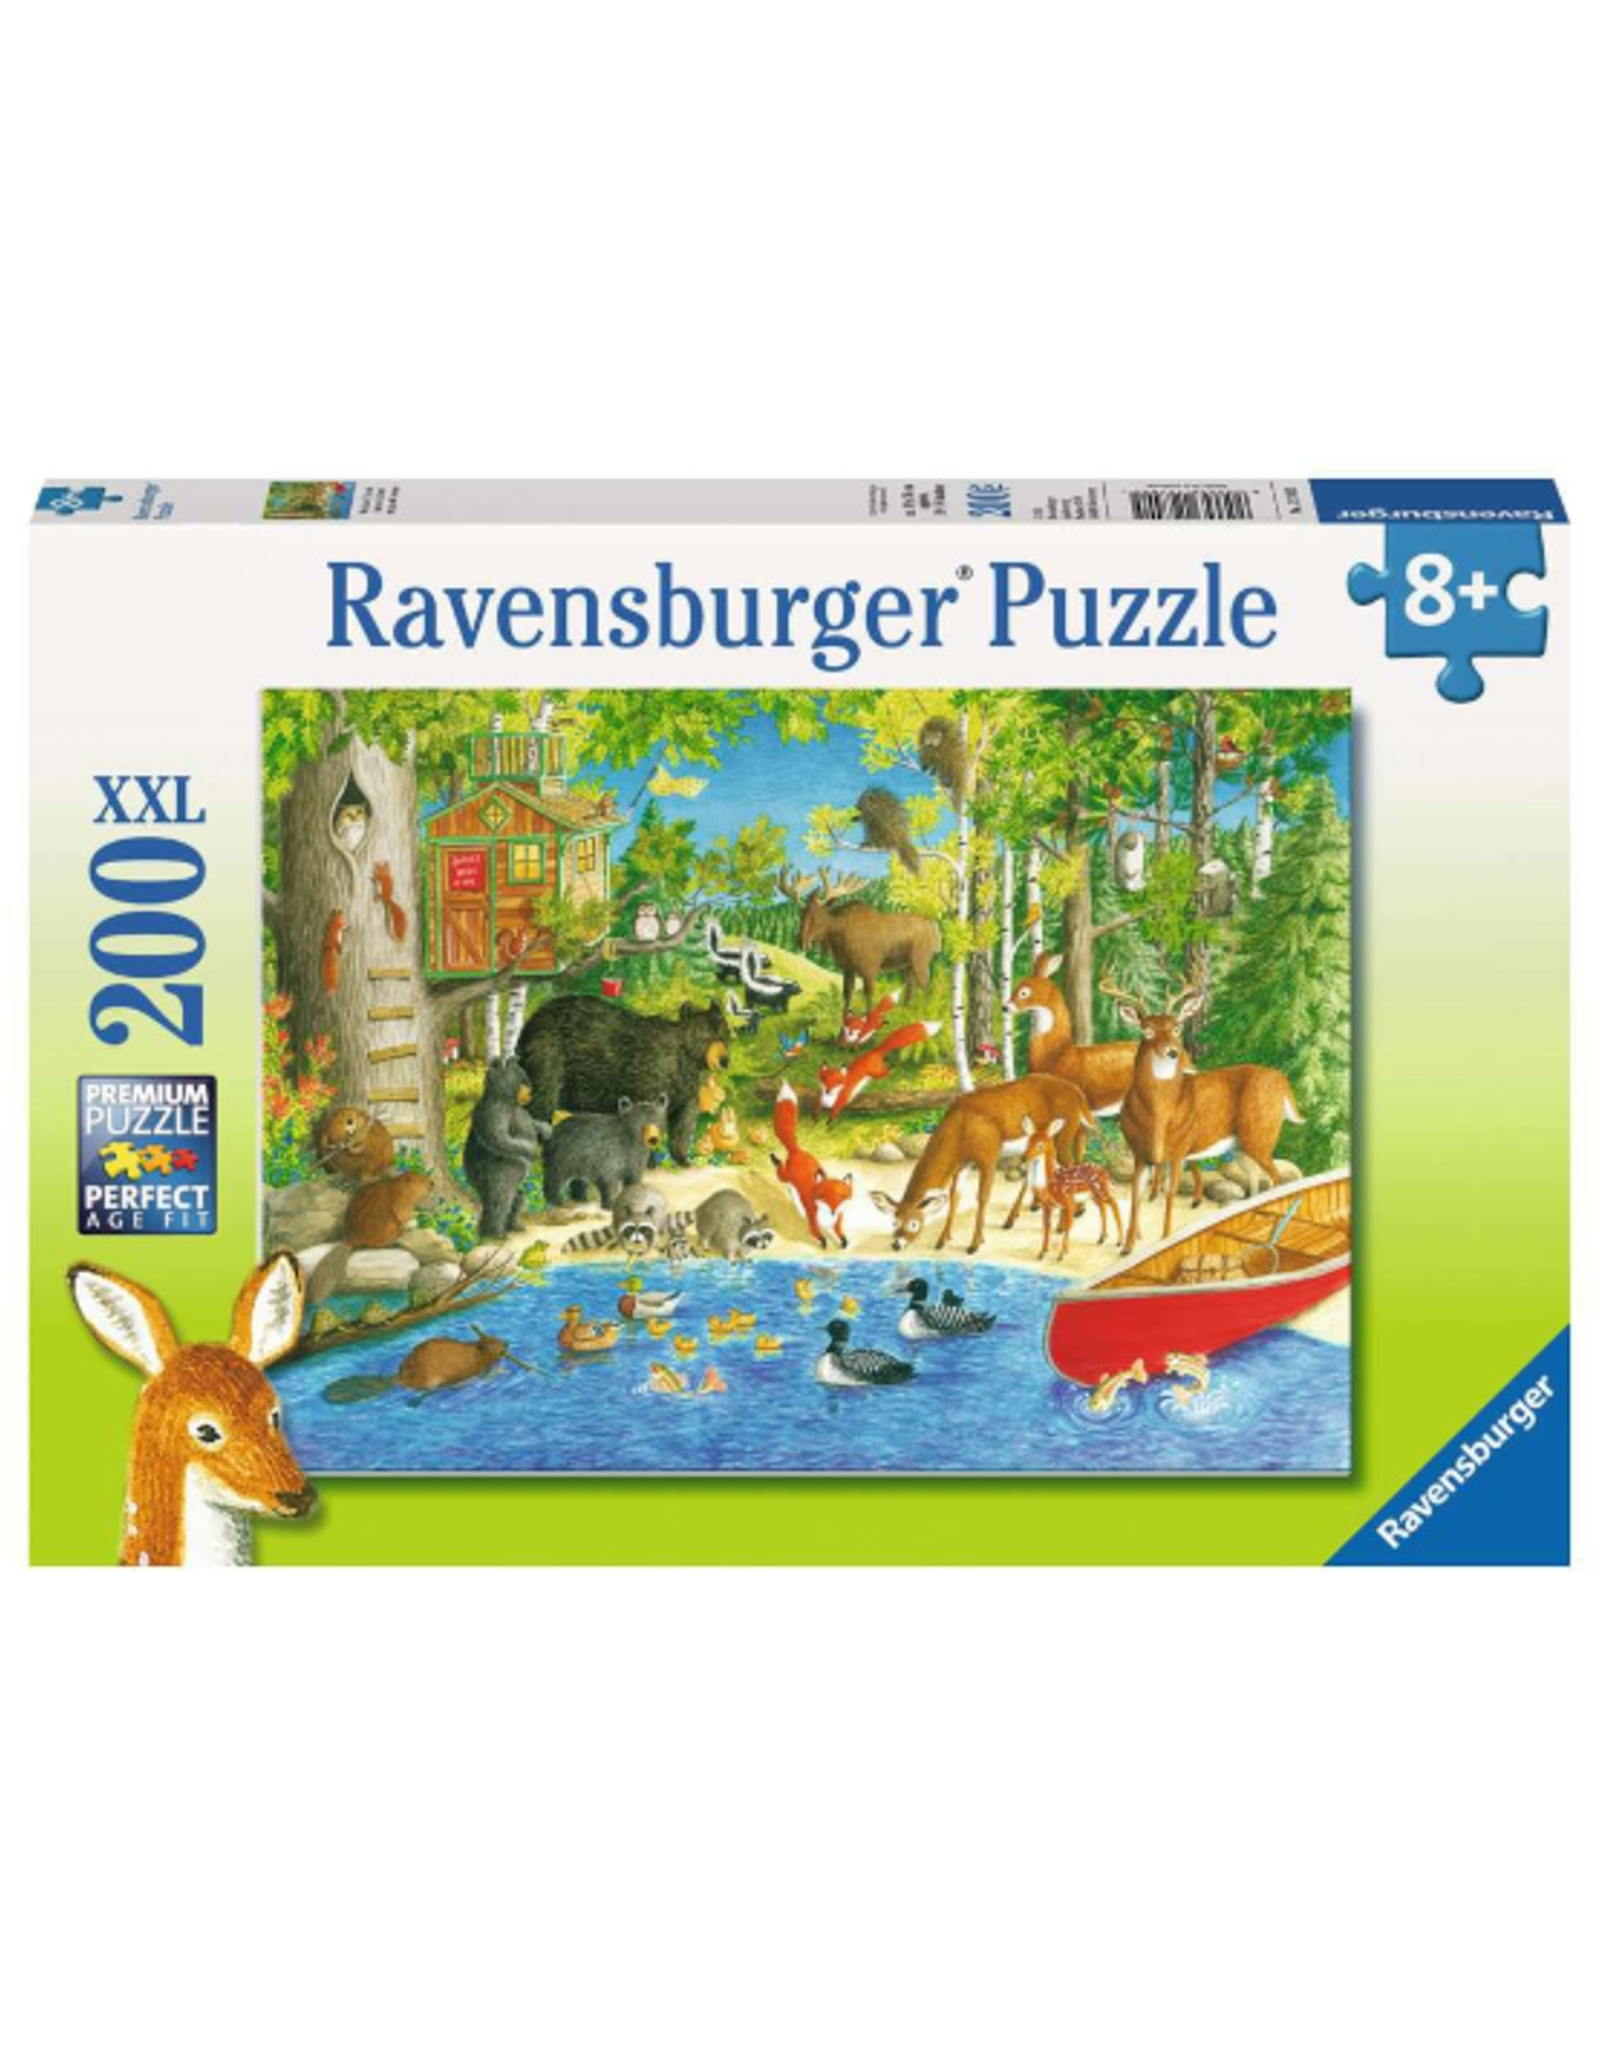 Ravensburger Ravensburger - 8+ - 200pcs - Woodland Friends